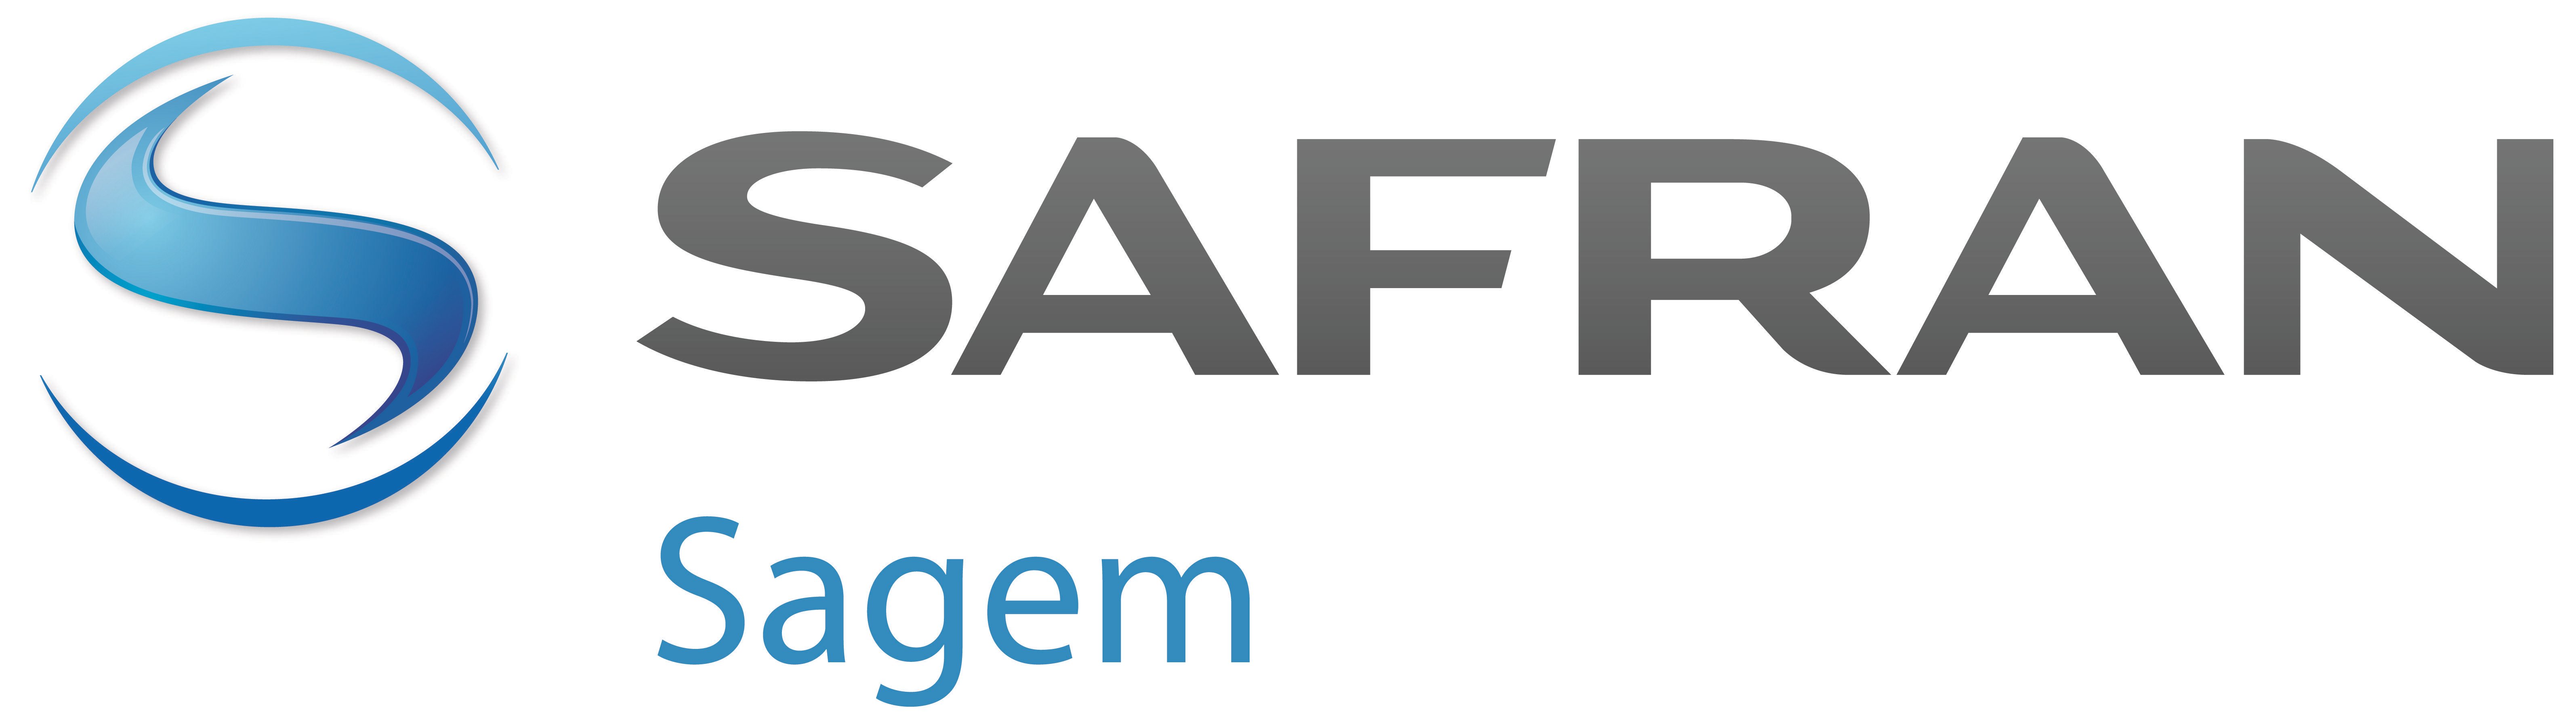 Sagem Logo - Sagemcom Logos